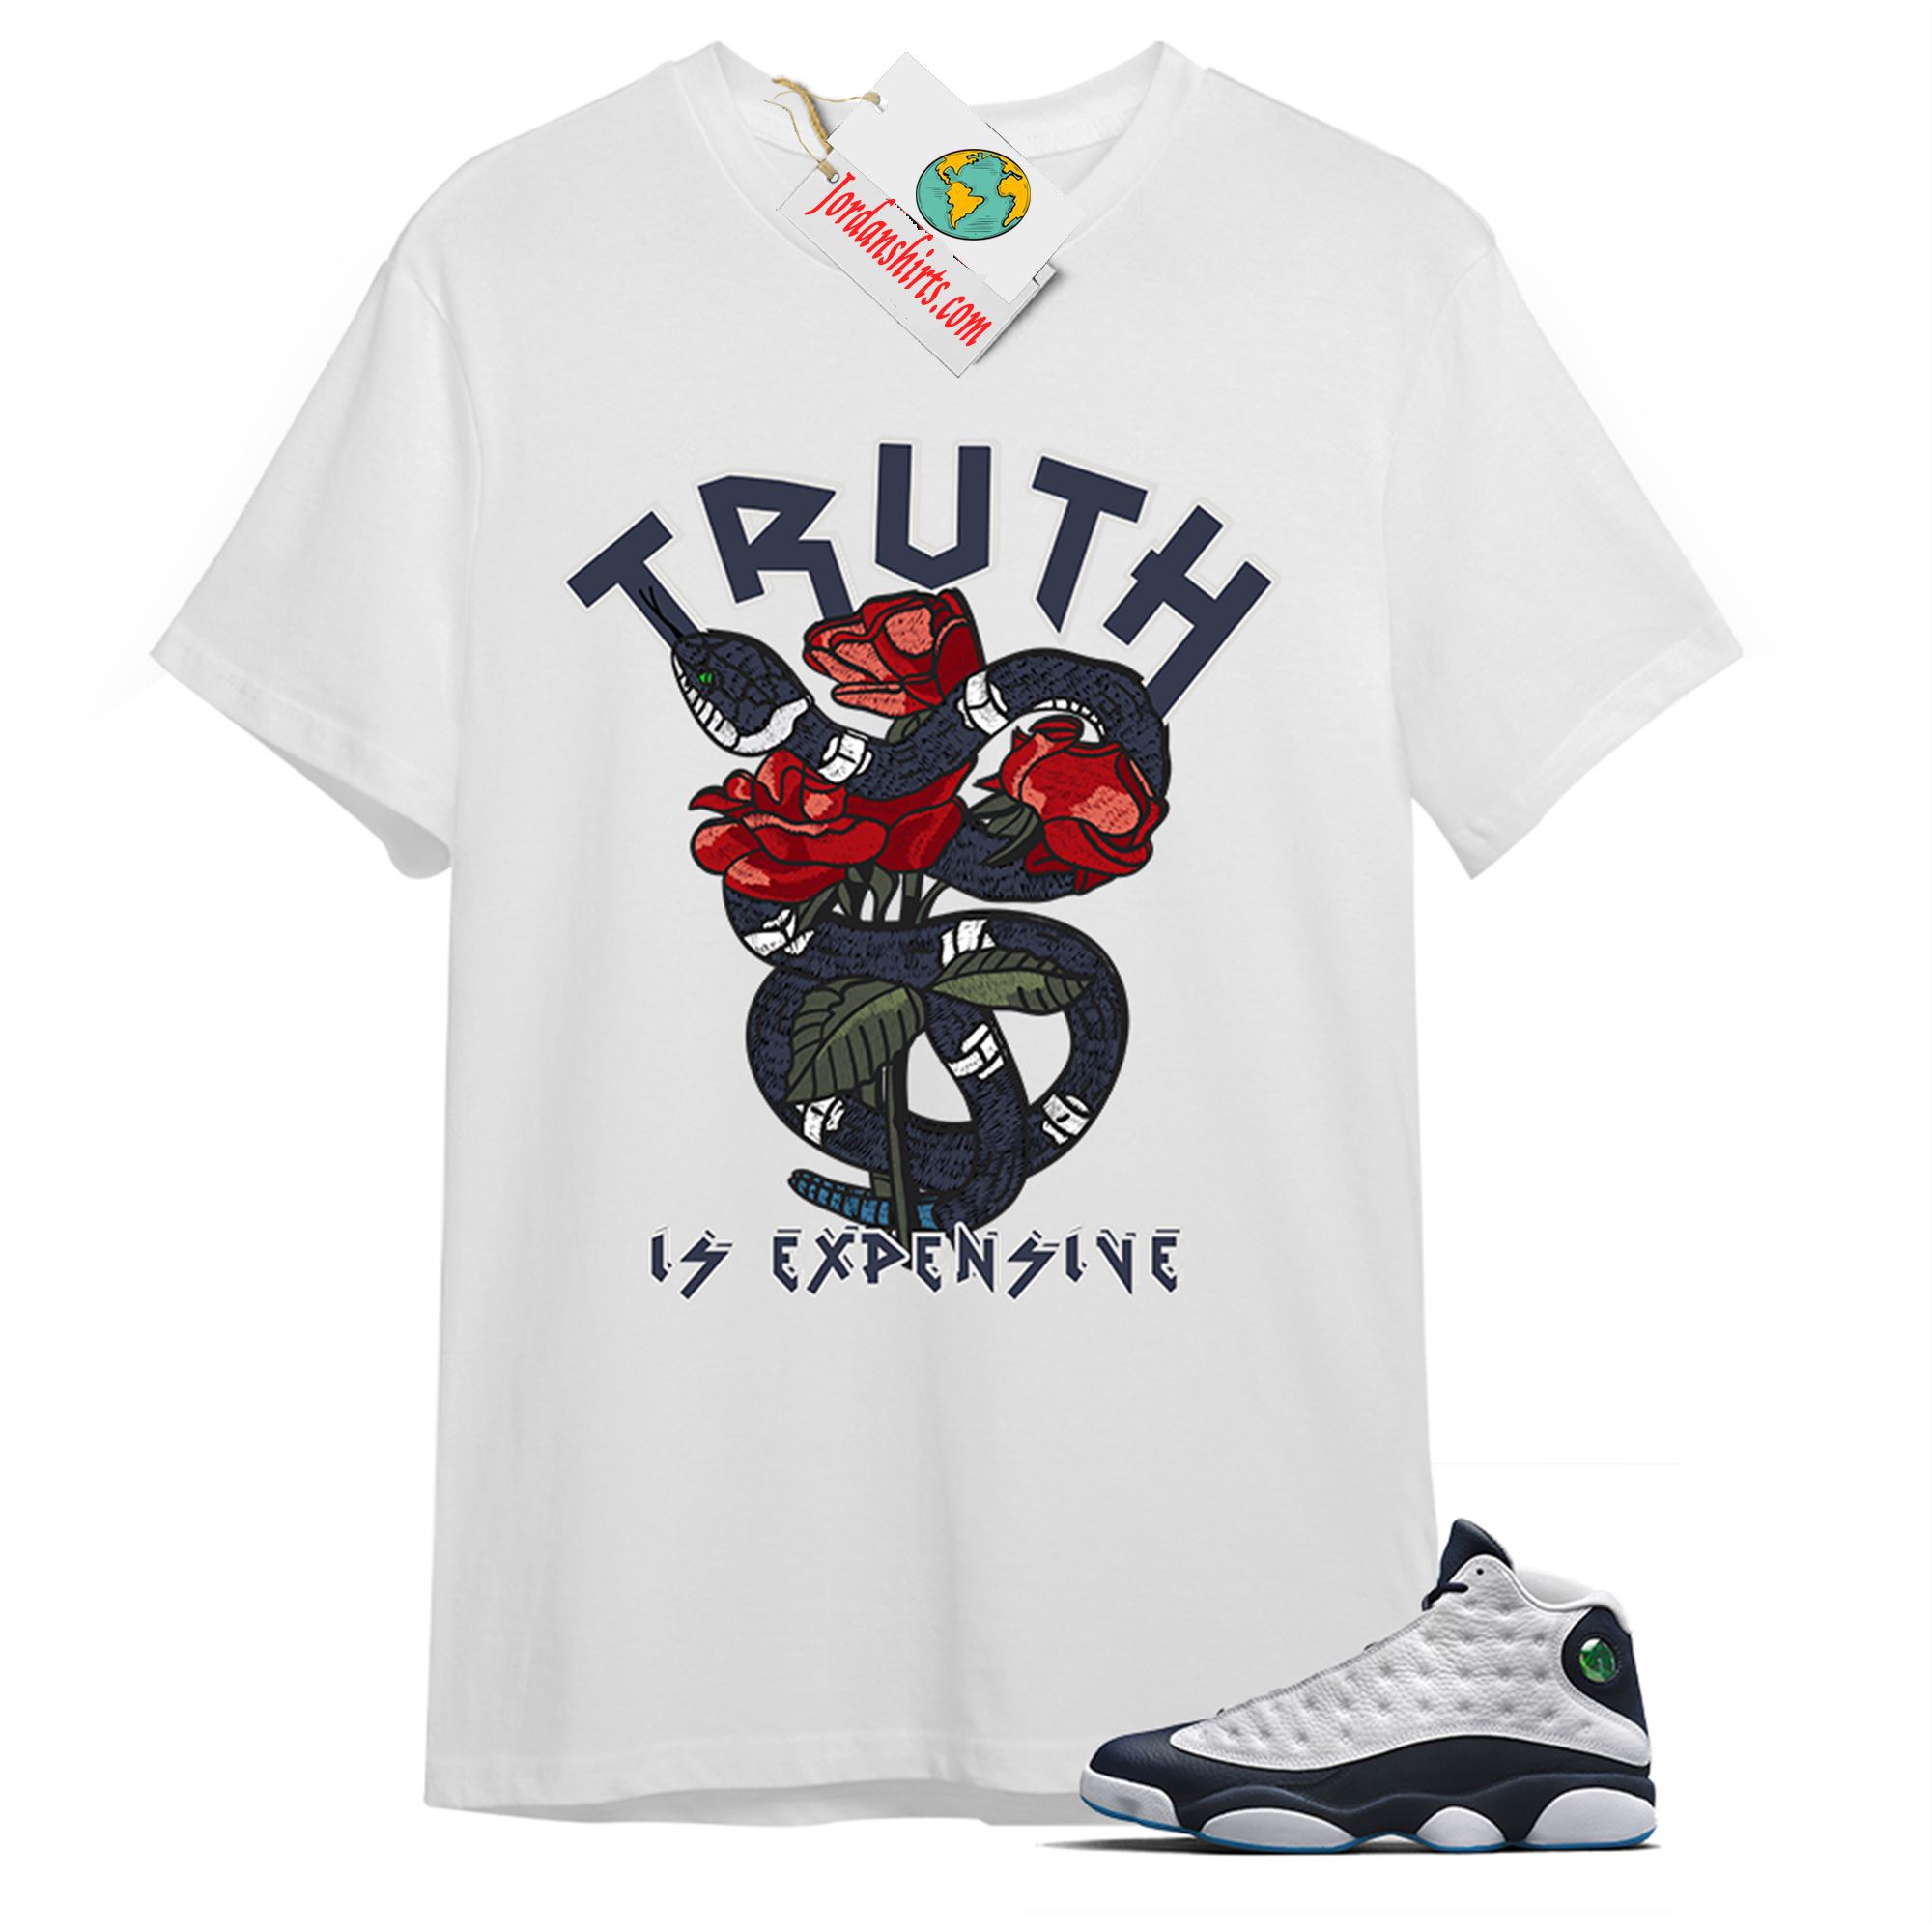 Jordan 13 Shirt, Truth Is Expensive Snake White T-shirt Air Jordan 13 Obsidian 13s Size Up To 5xl